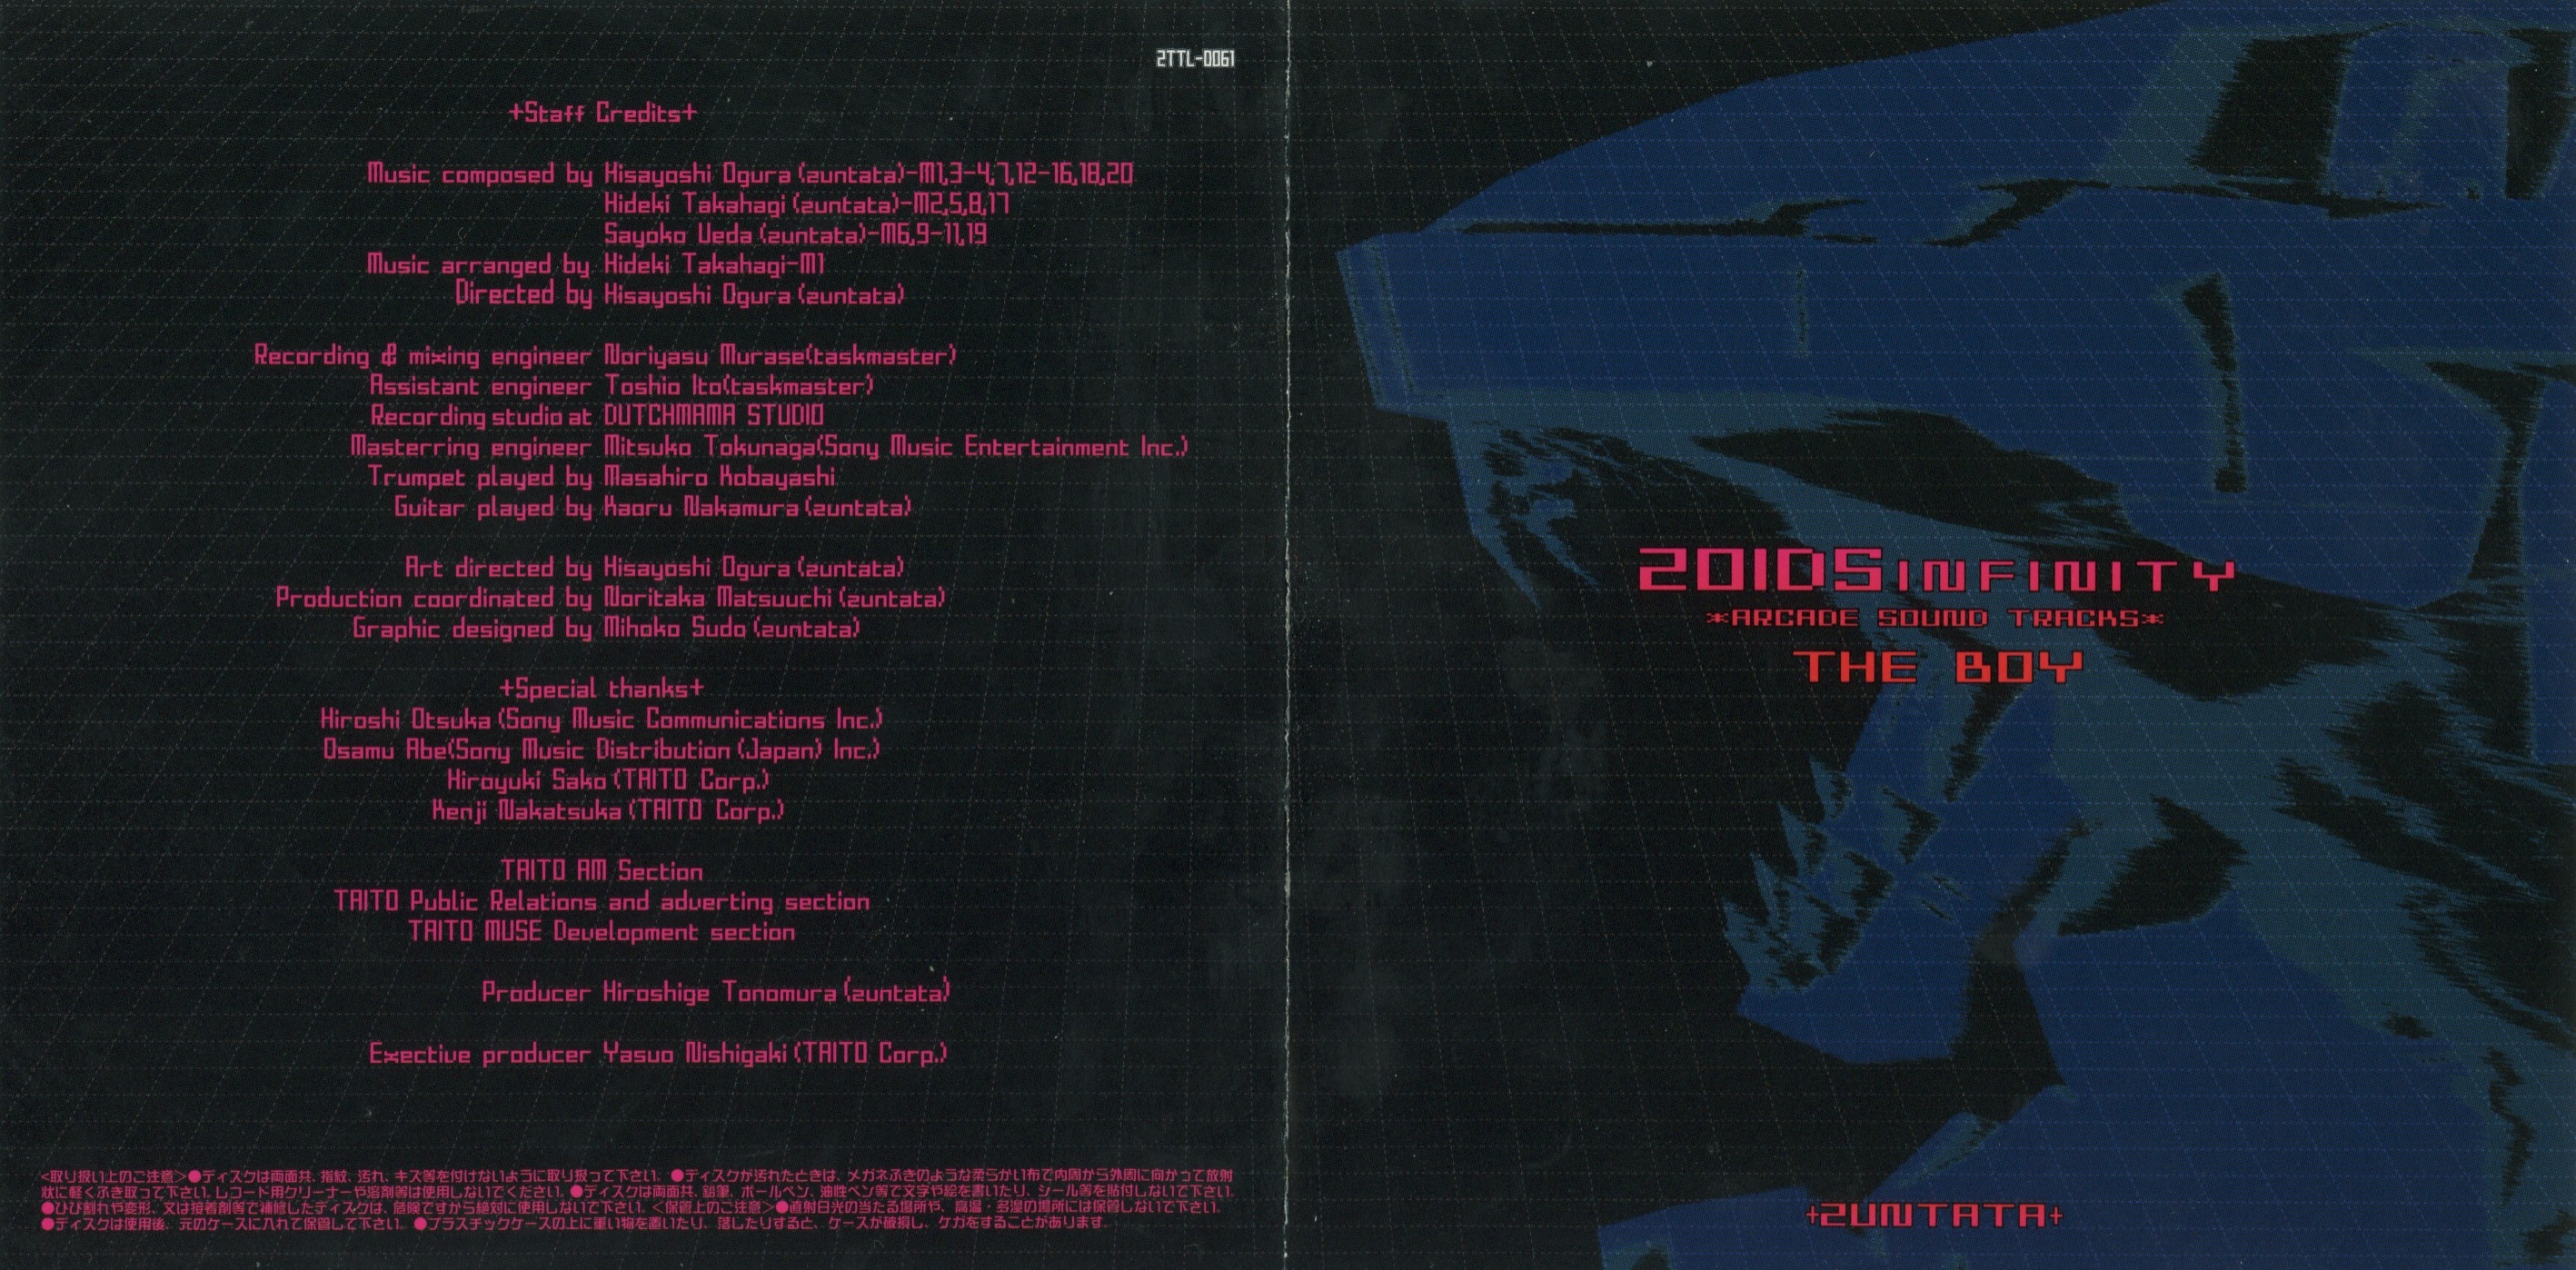 ZOIDS INFINITY *ARCADE SOUND TRACKS* THE BOY (2004) MP3 - Download 